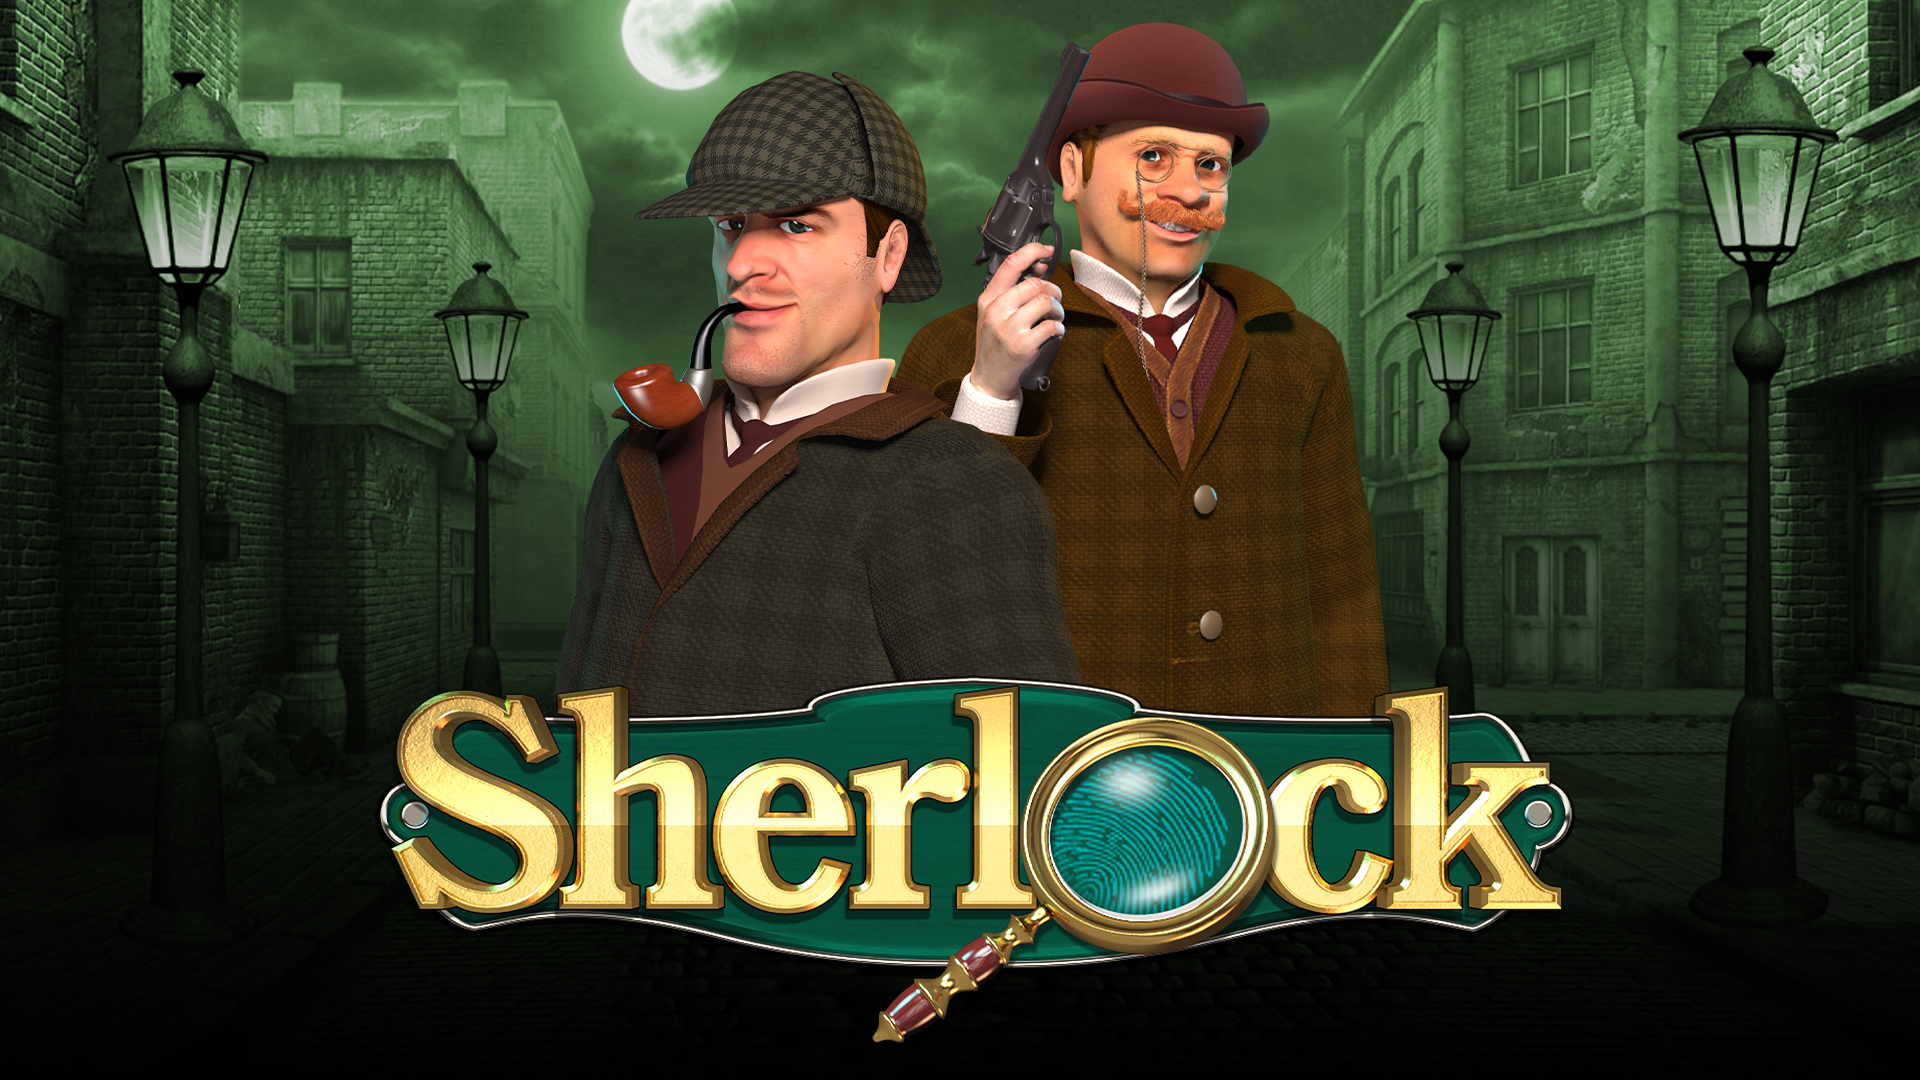 Sherlock-Slot-Machine-Online-Bonus-Casino-Betaland-TheClover